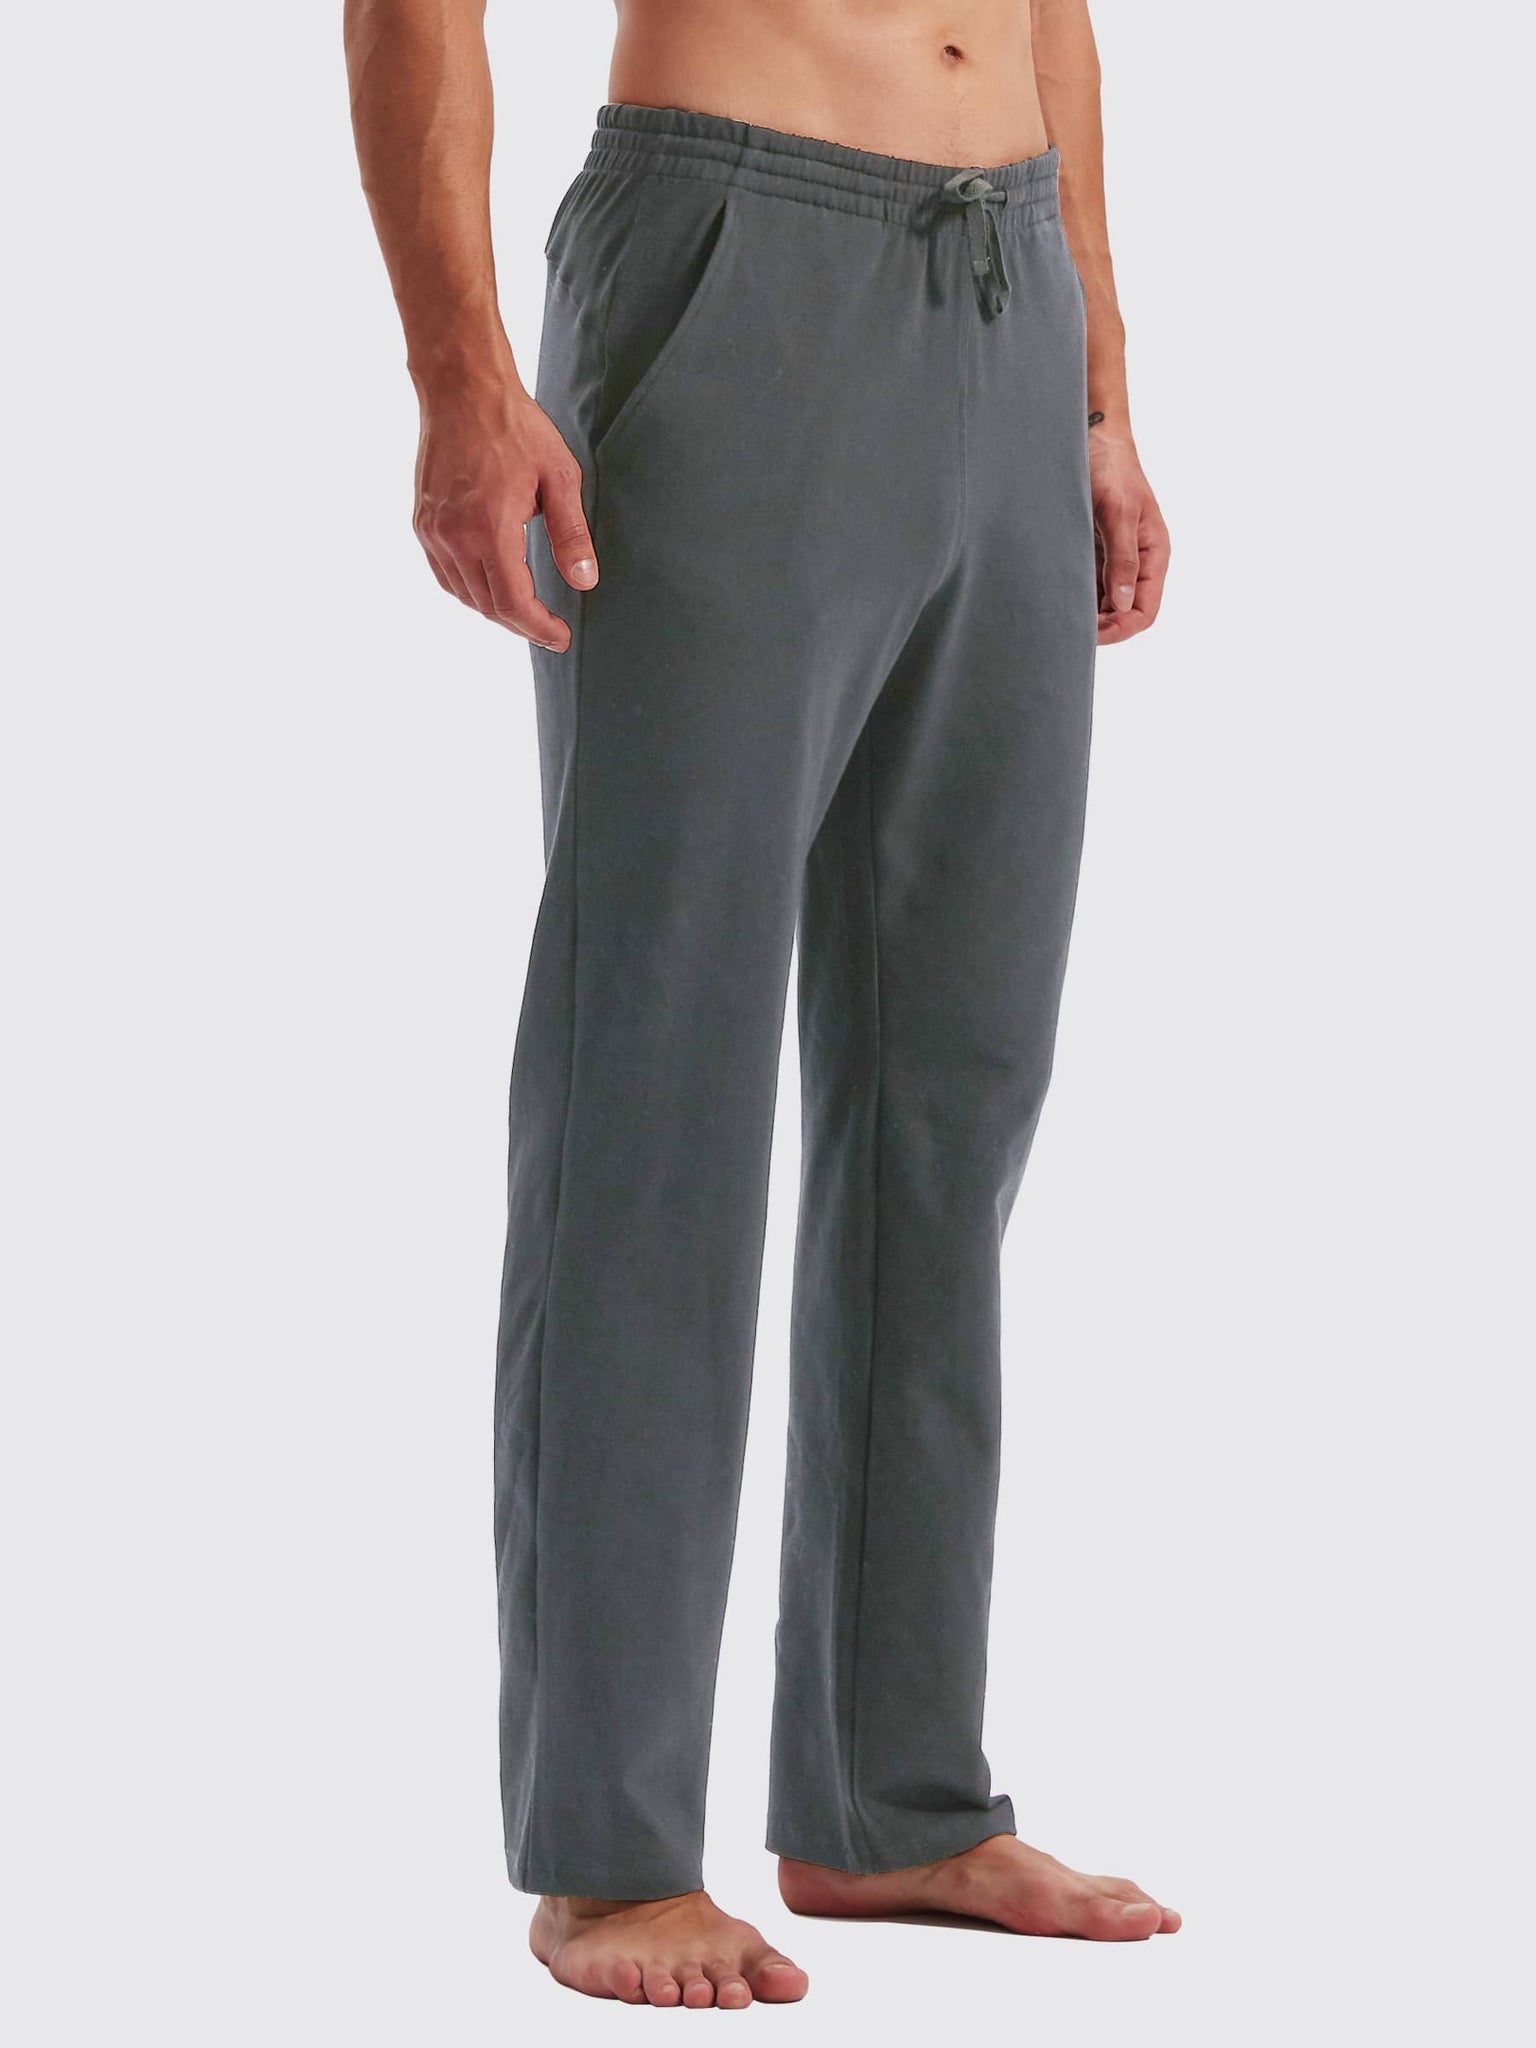 Men's Cotton Yoga Balance Sweatpants_DeepGray_model2